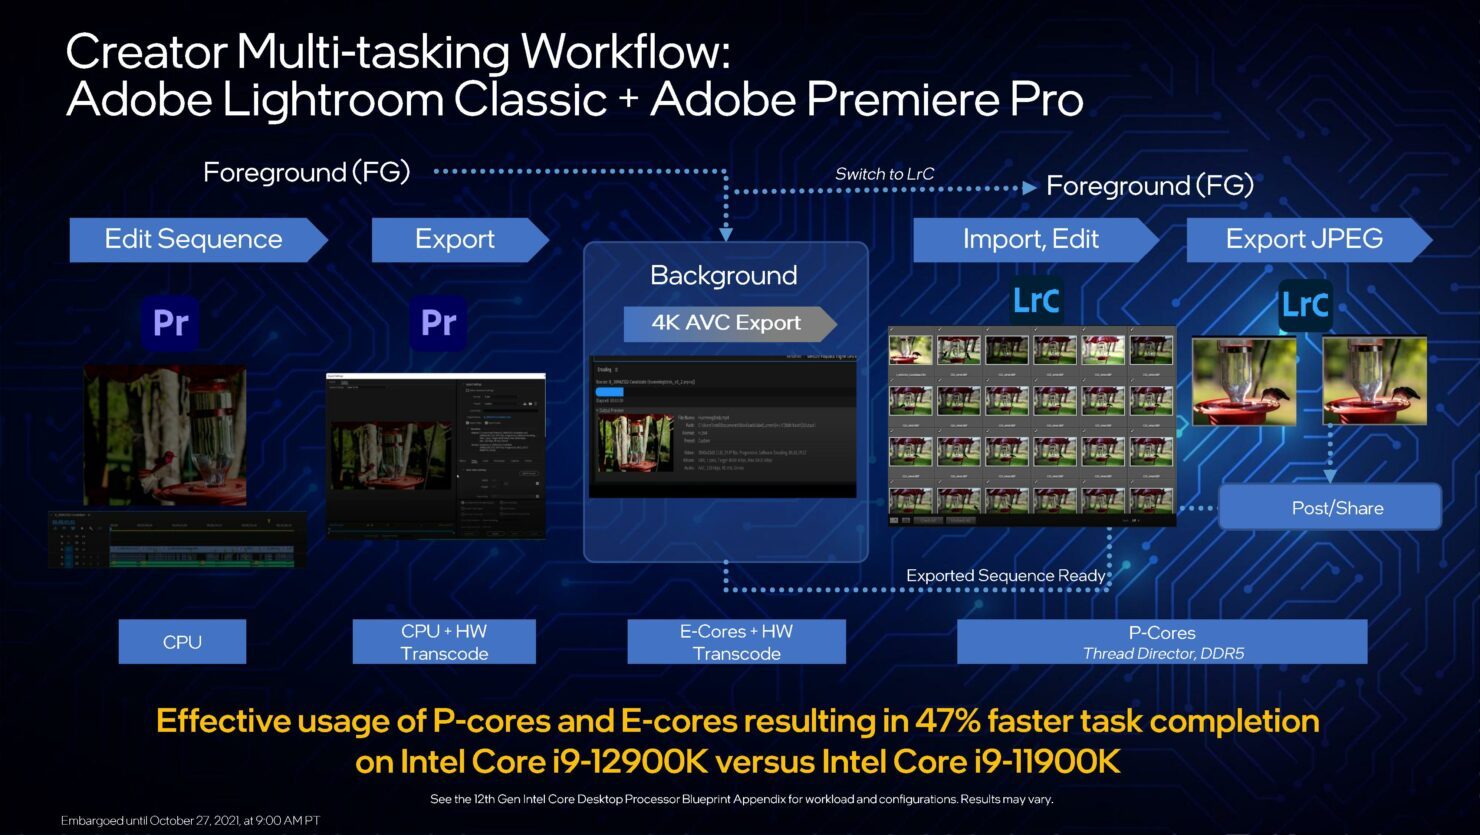 12th-gen-intel-core-desktop-processors-blueprint-presentation-embargoed-until-oct-27-2021-at-9-00am-pt-page-032